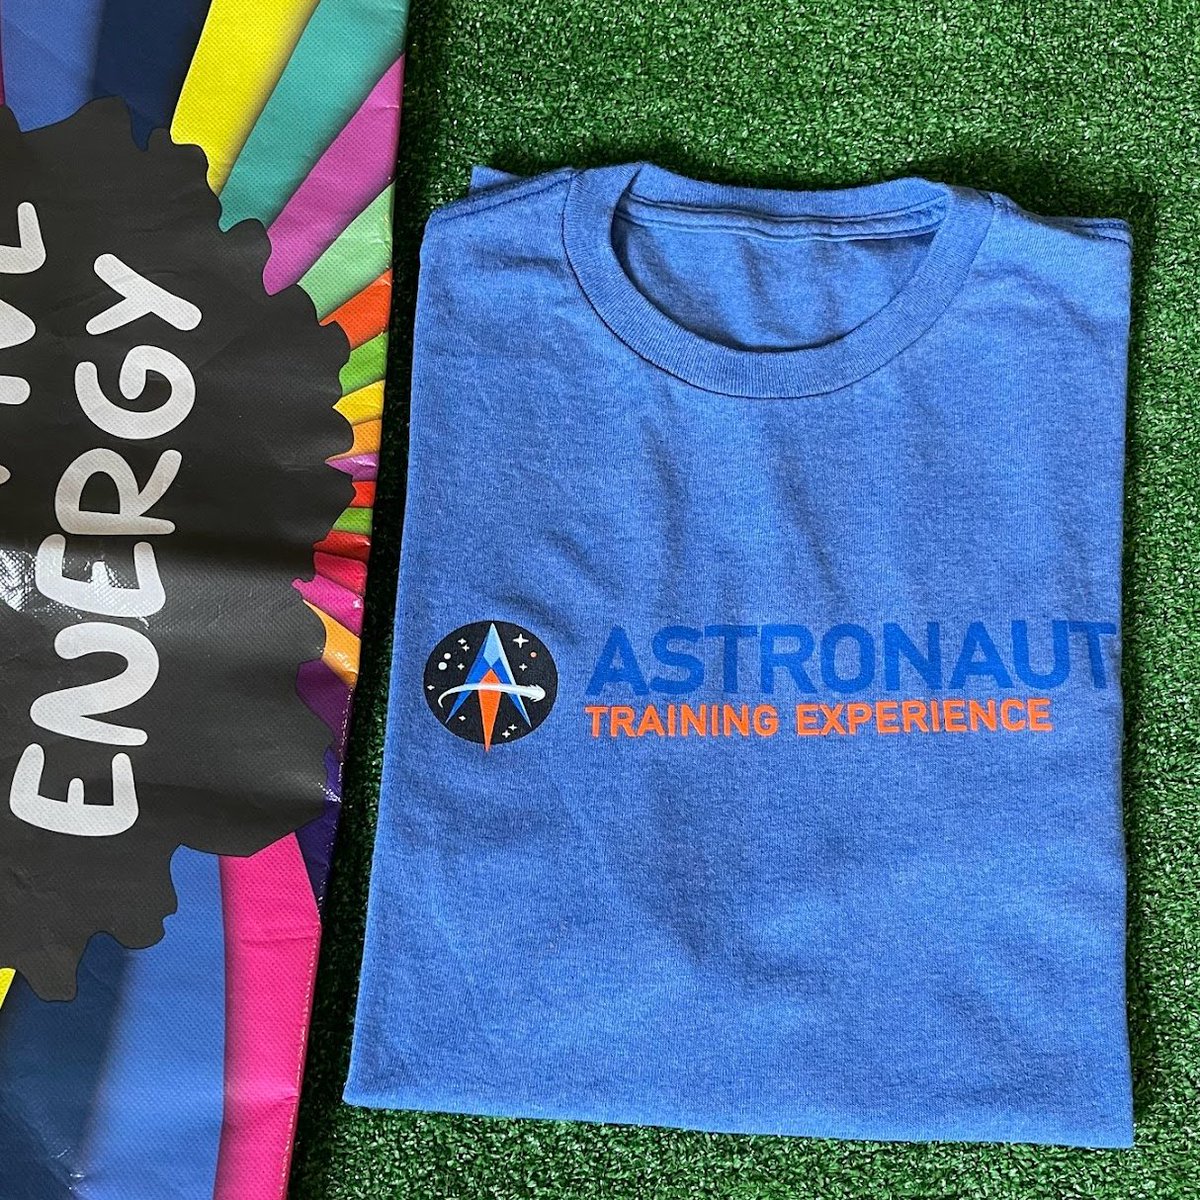 NASA Kennedy Space Center Astronaut Training Souvenir Blue Tee T-Shirt Size XL

#NASA
#KennedySpaceCenter
#AstronautTraining
#SpaceSouvenir
#BlueTShirt
#SizeXL
#SpaceExploration
#NASAStyle
#SpaceTee
#CollectorItem

ebay.com/itm/1261923050…